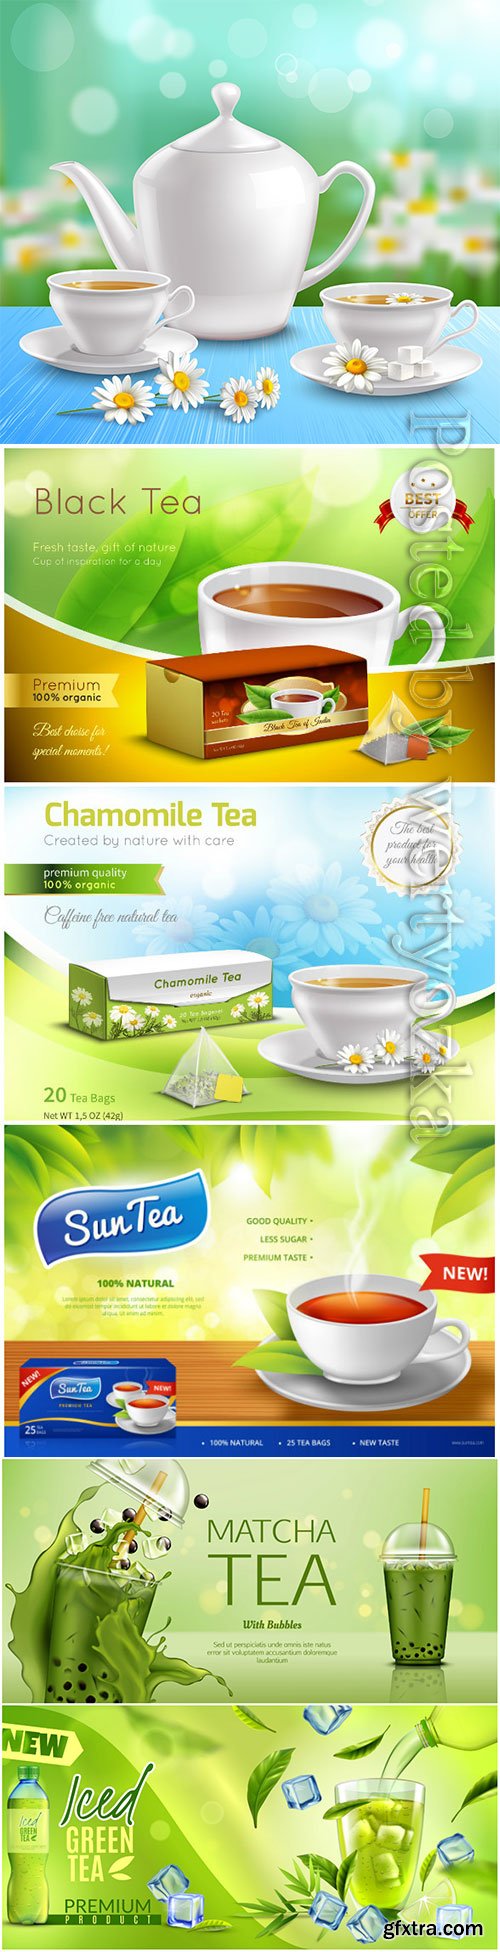 Realistic tea ad concept vector illustration